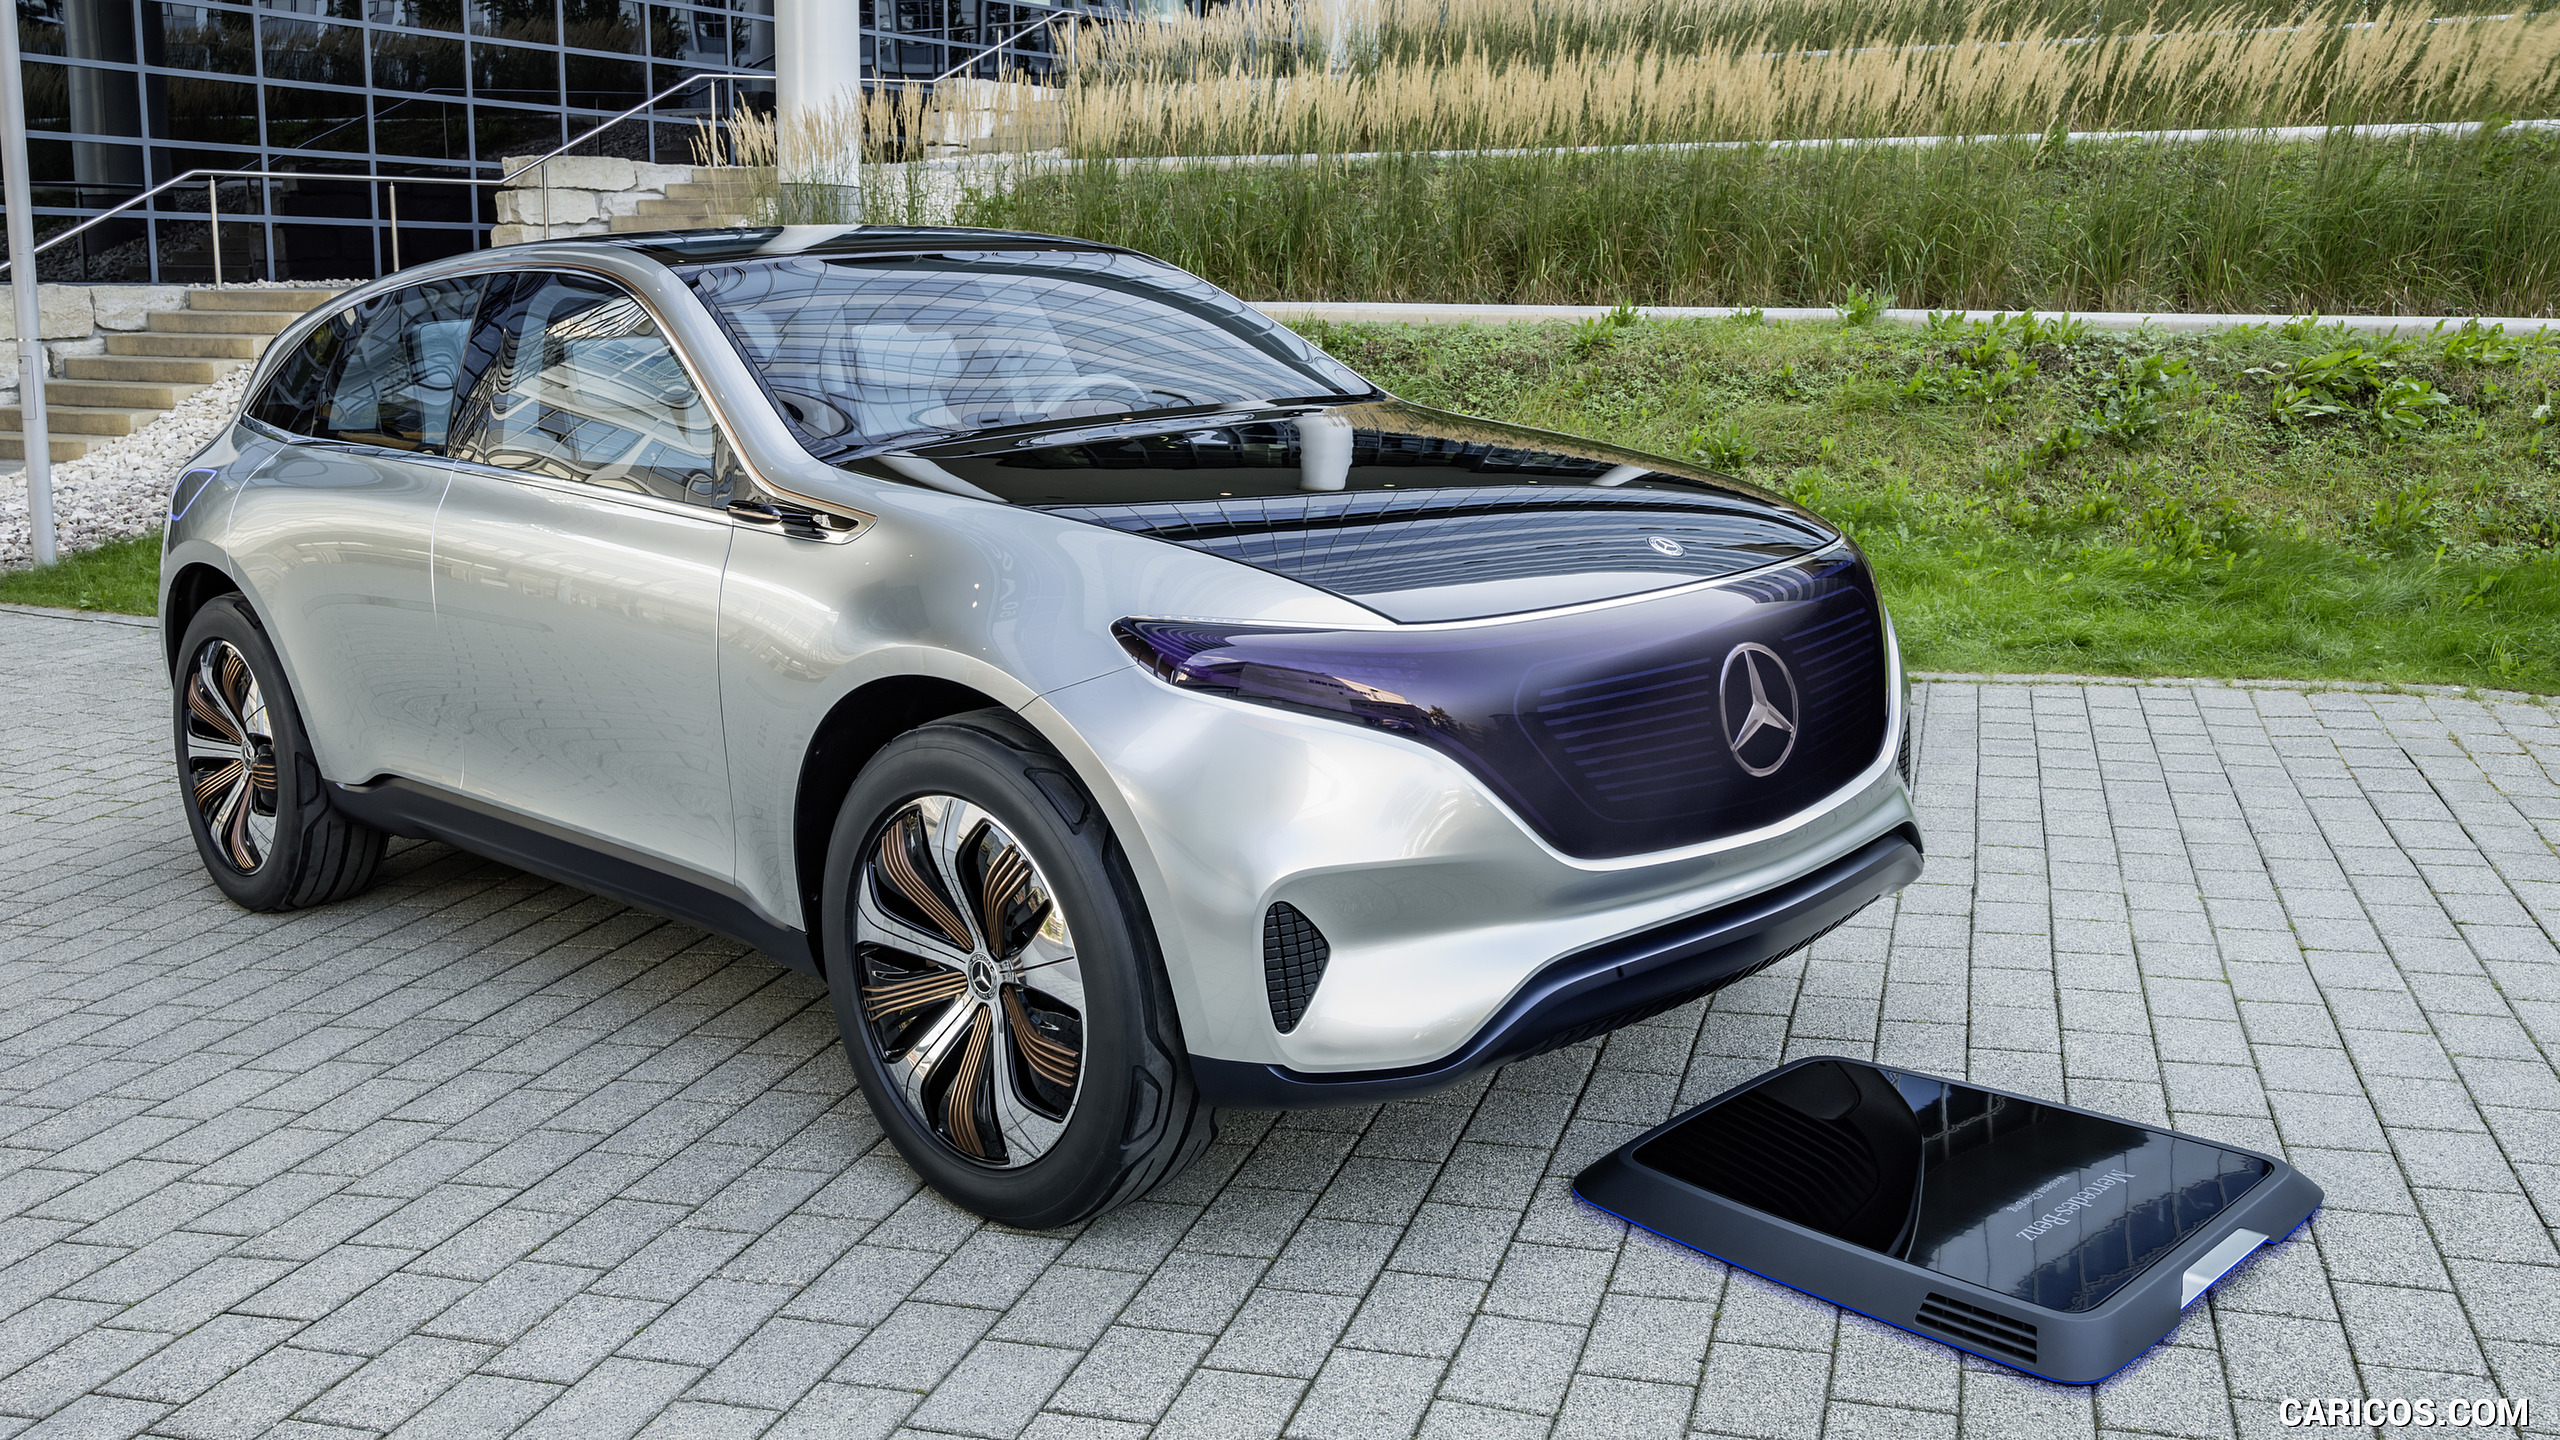 2016 Mercedes-Benz Generation EQ SUV Concept - Inductive Charging Platform, #16 of 50